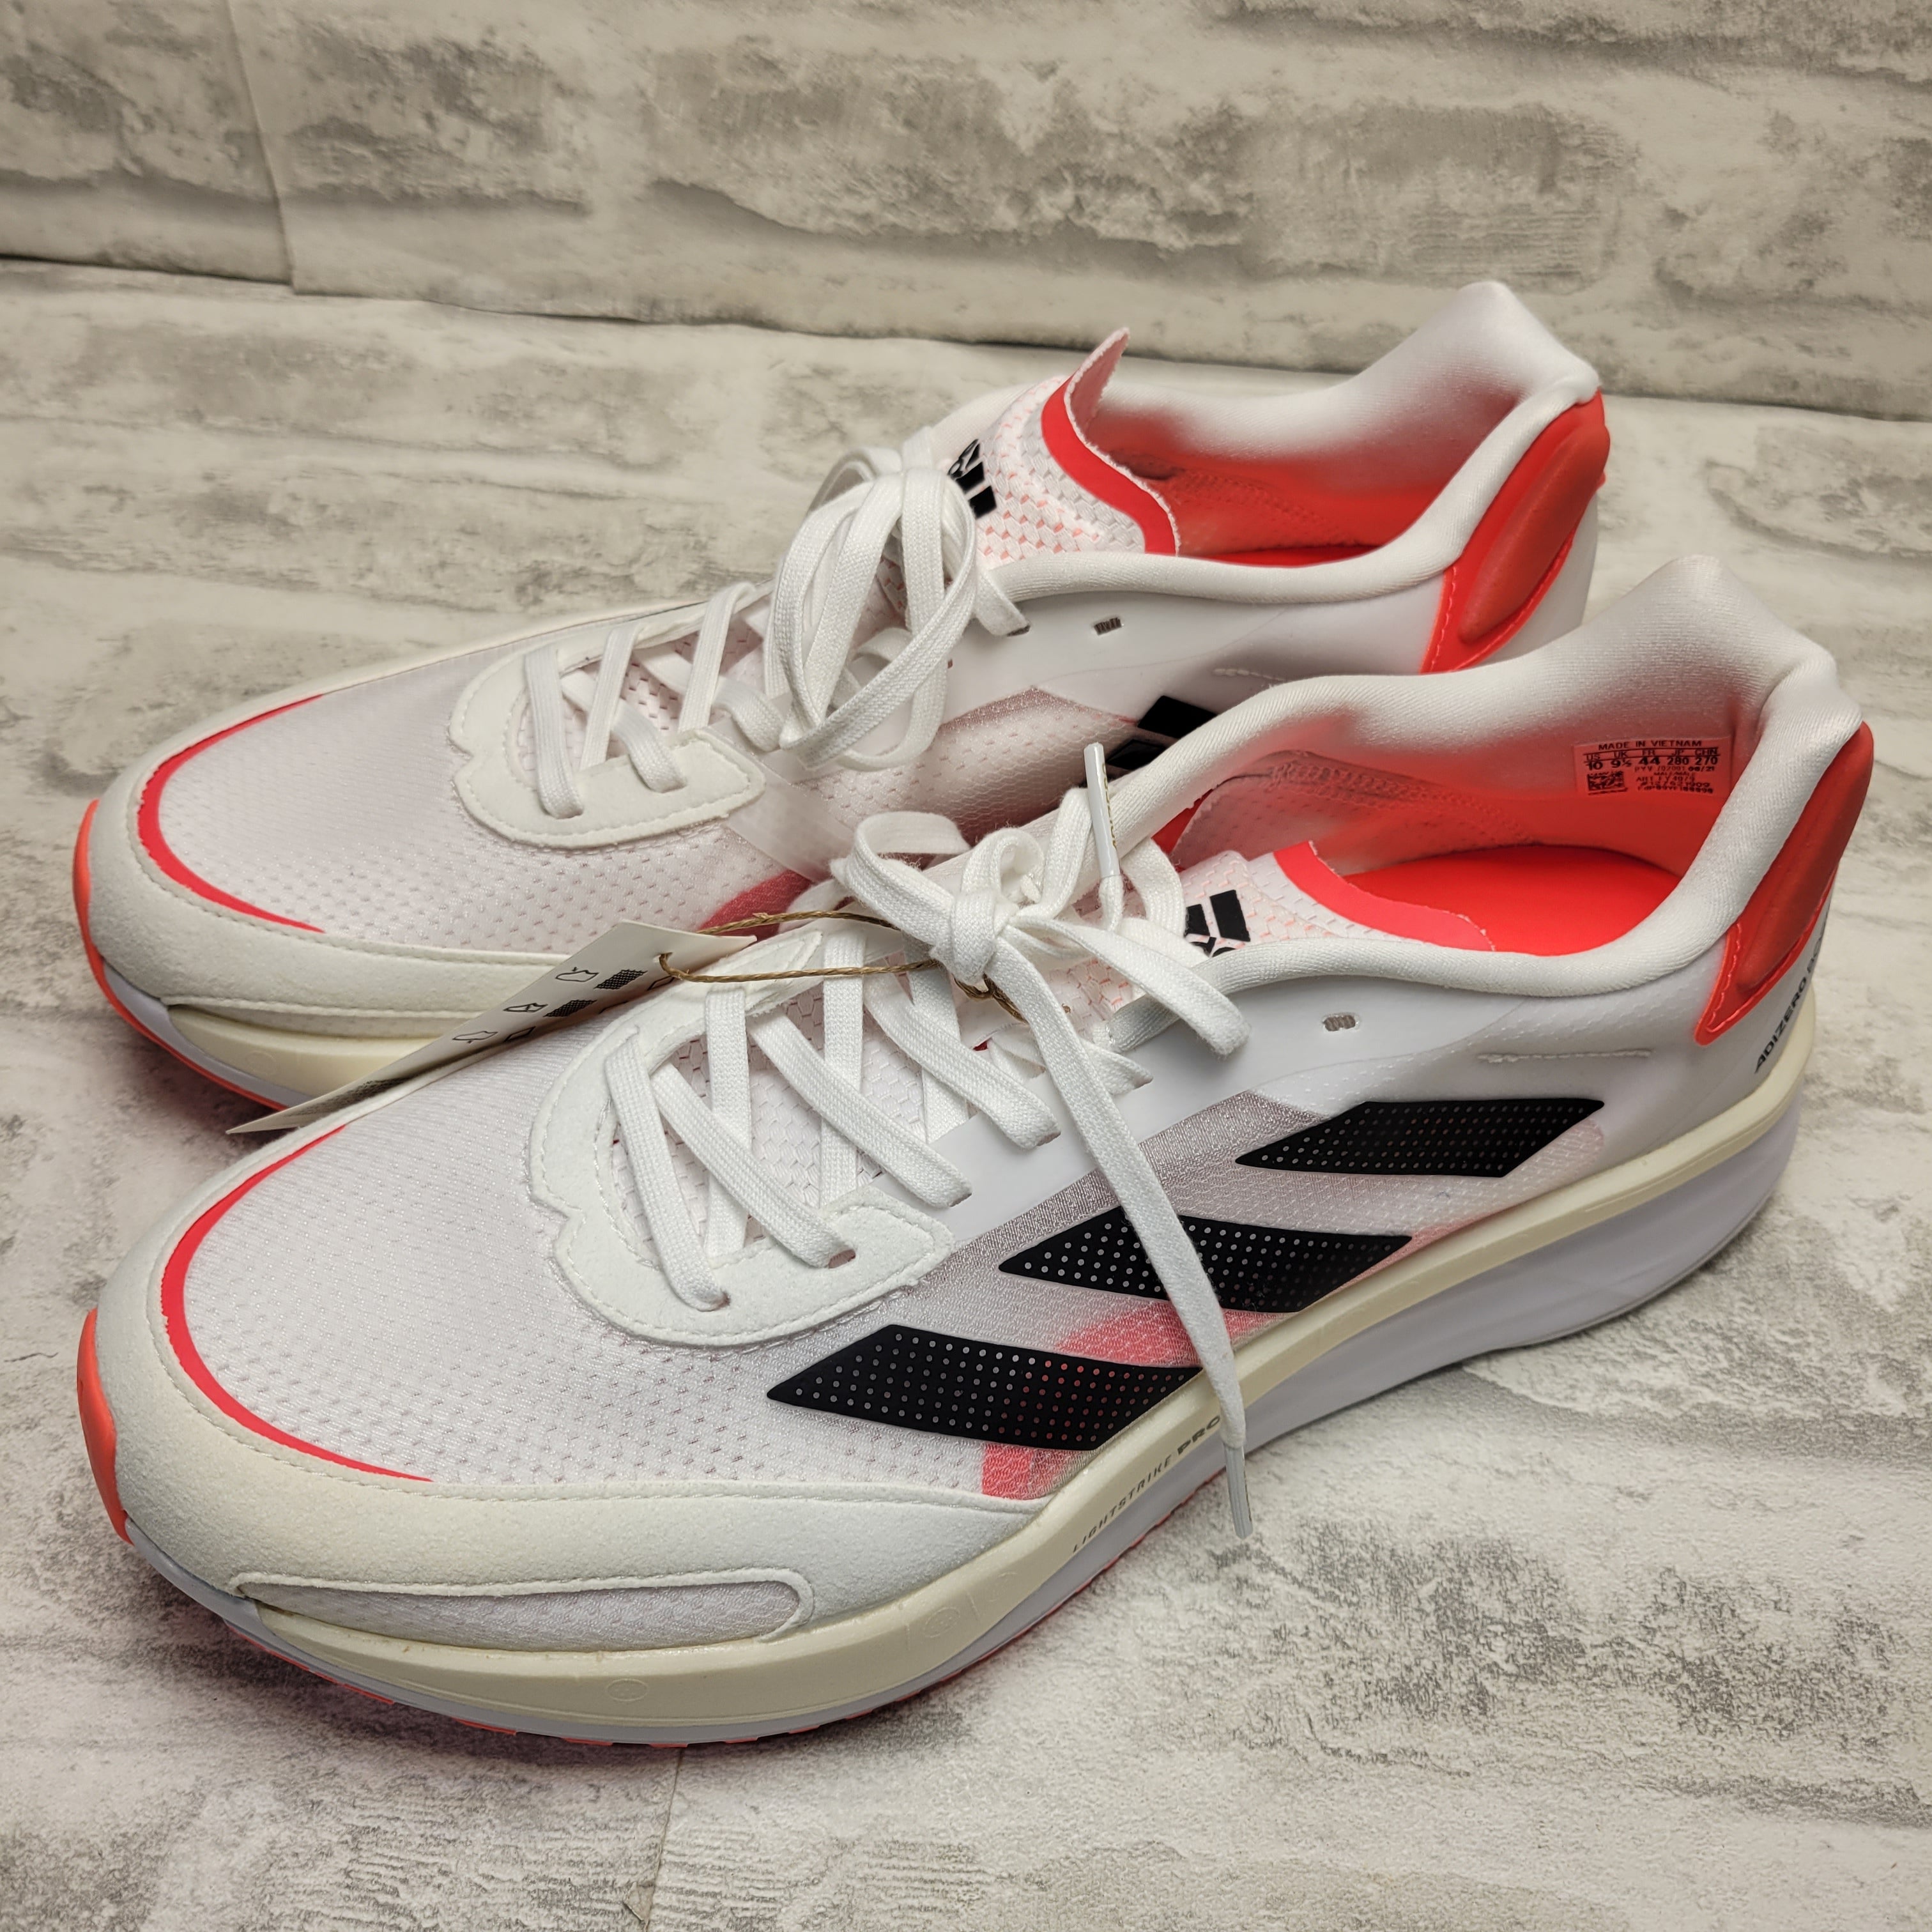 adidas Adizero Boston Men's Running Shoes 10 M Ftw White/Core Black/Solar Red (7878163824878)